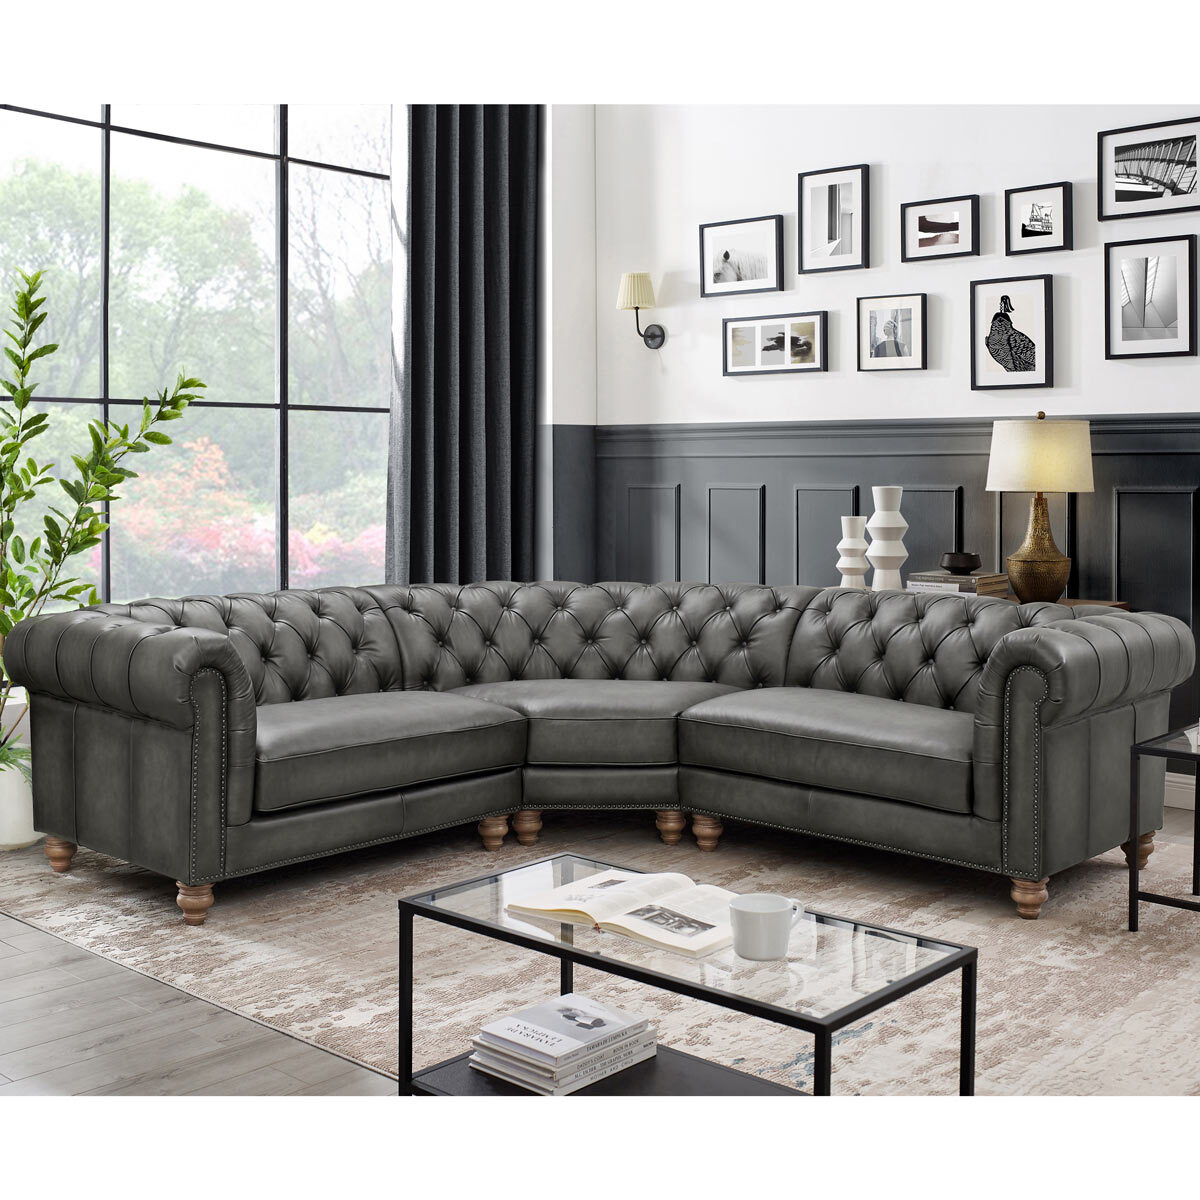 Allington Grey Leather Chesterfield Corner Sofa | Costco UK